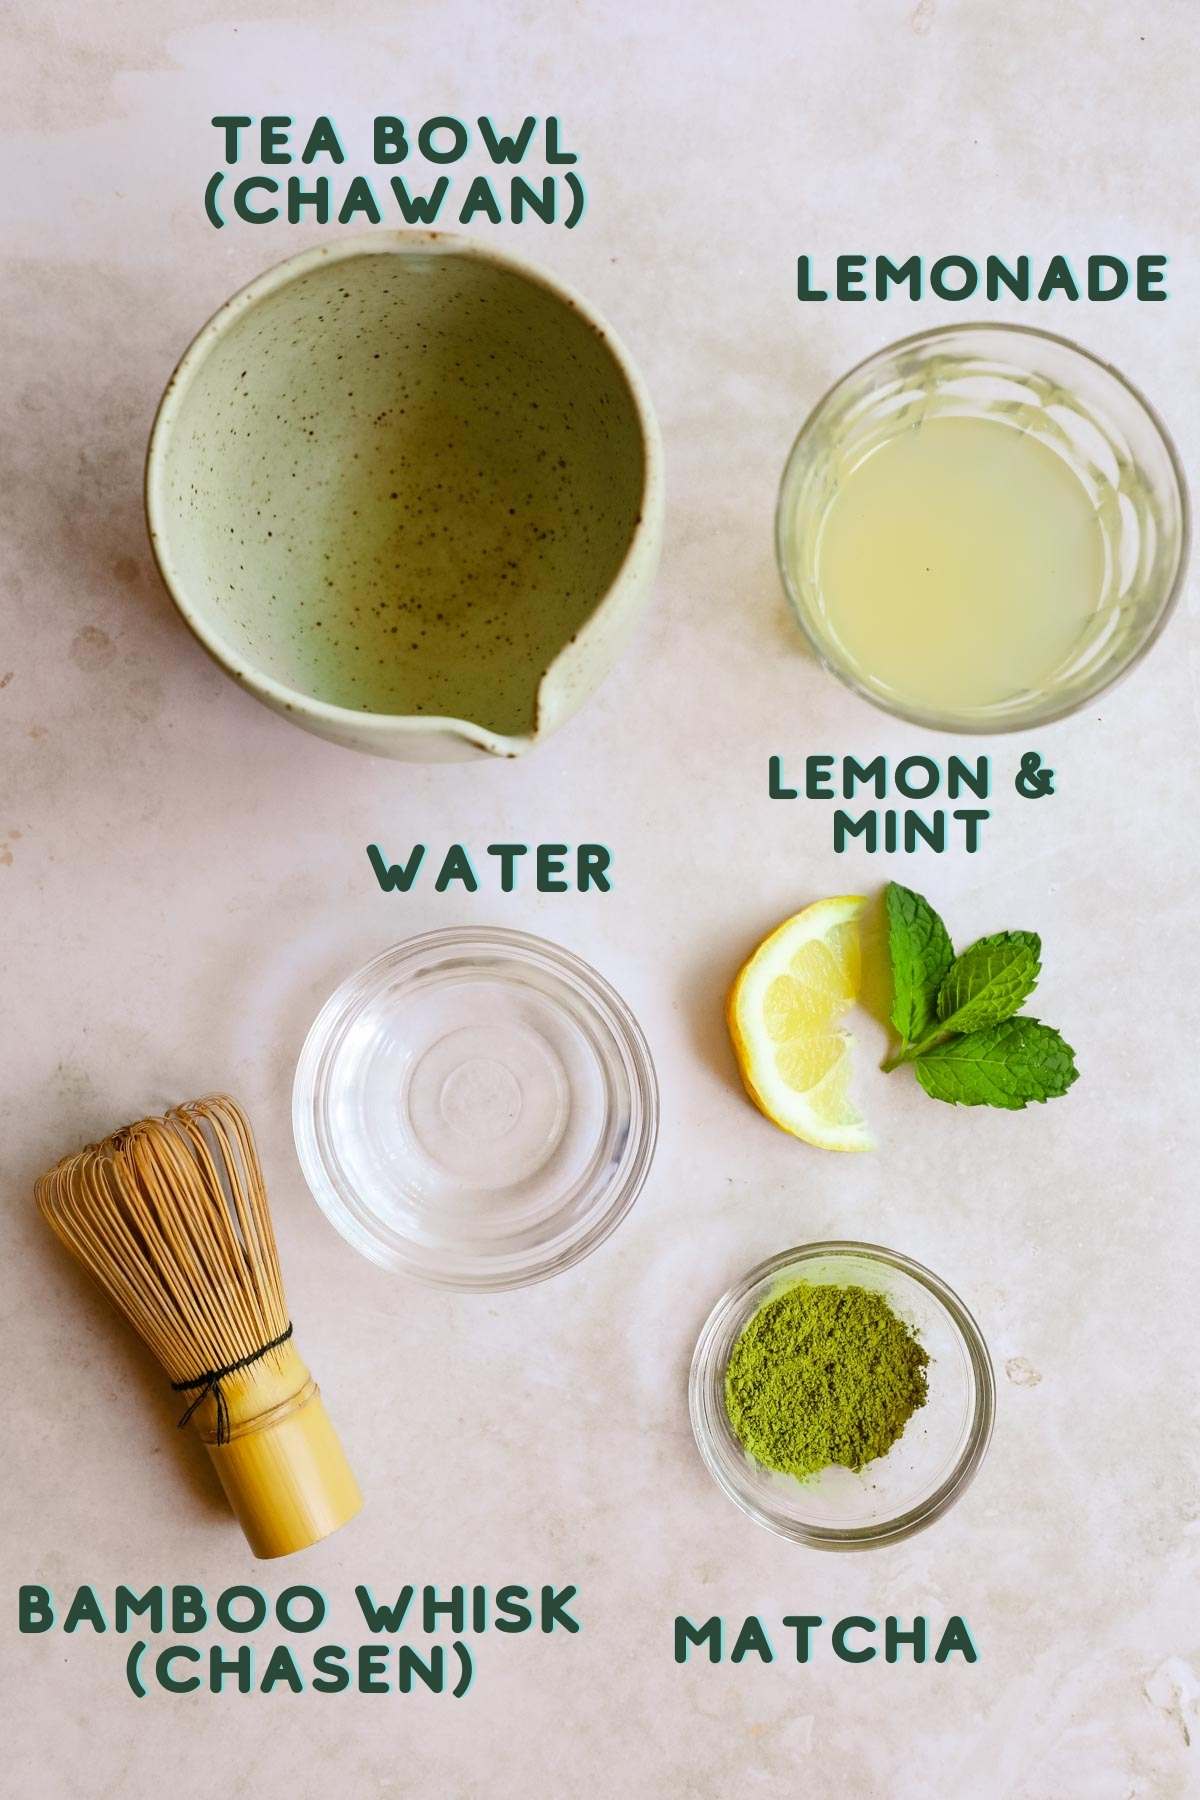 Ingredients for matcha lemonade, including matcha, mint, lemon, water, and lemonade.